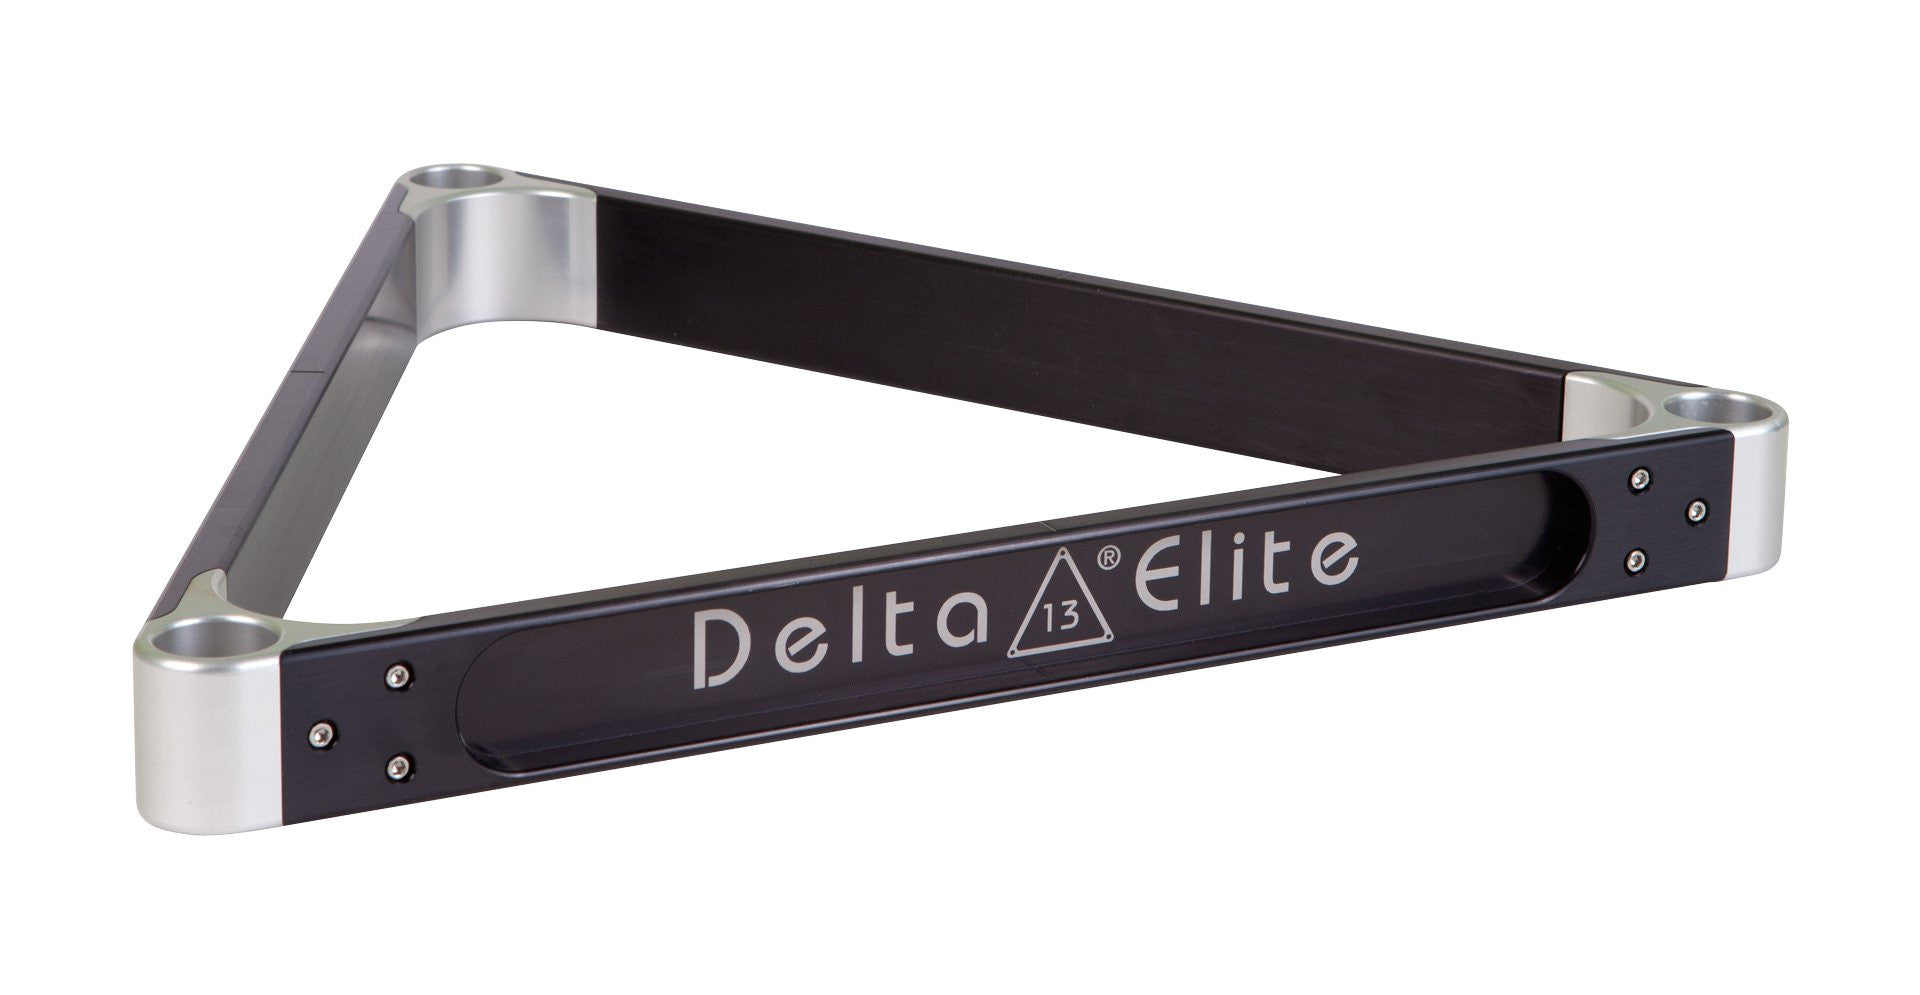 Delta-13 Elite Triangle Rack